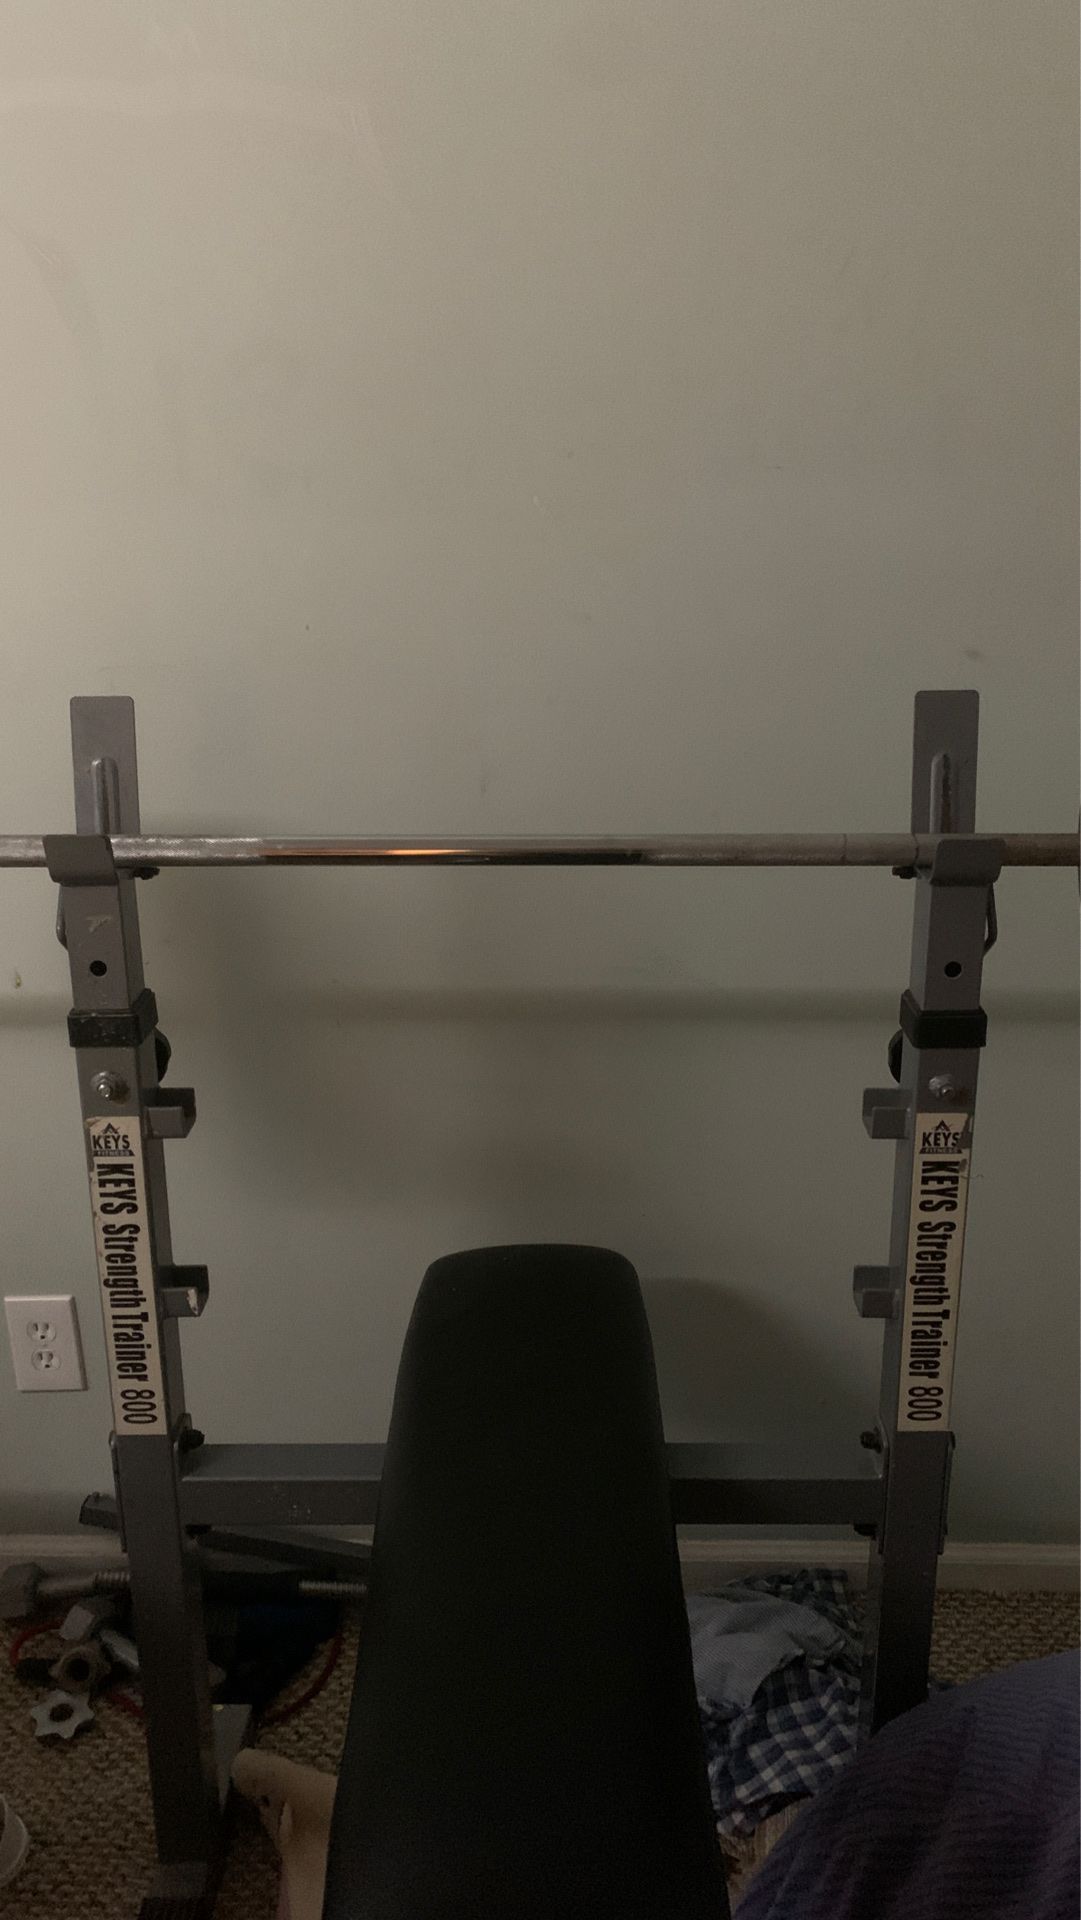 Weight bench